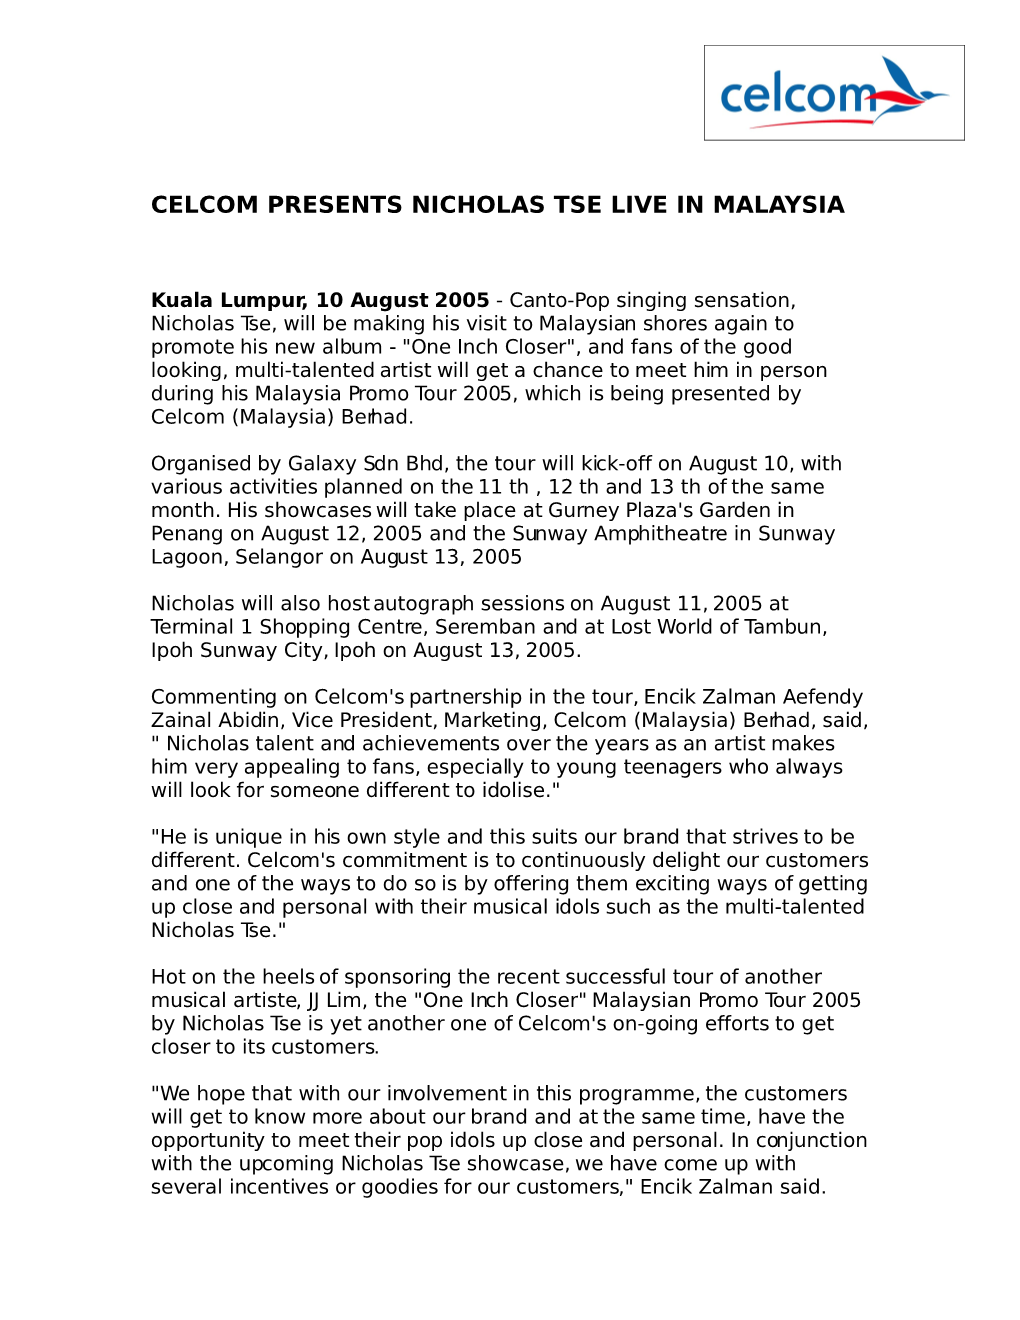 Celcom Presents Nicholas Tse Live in Malaysia